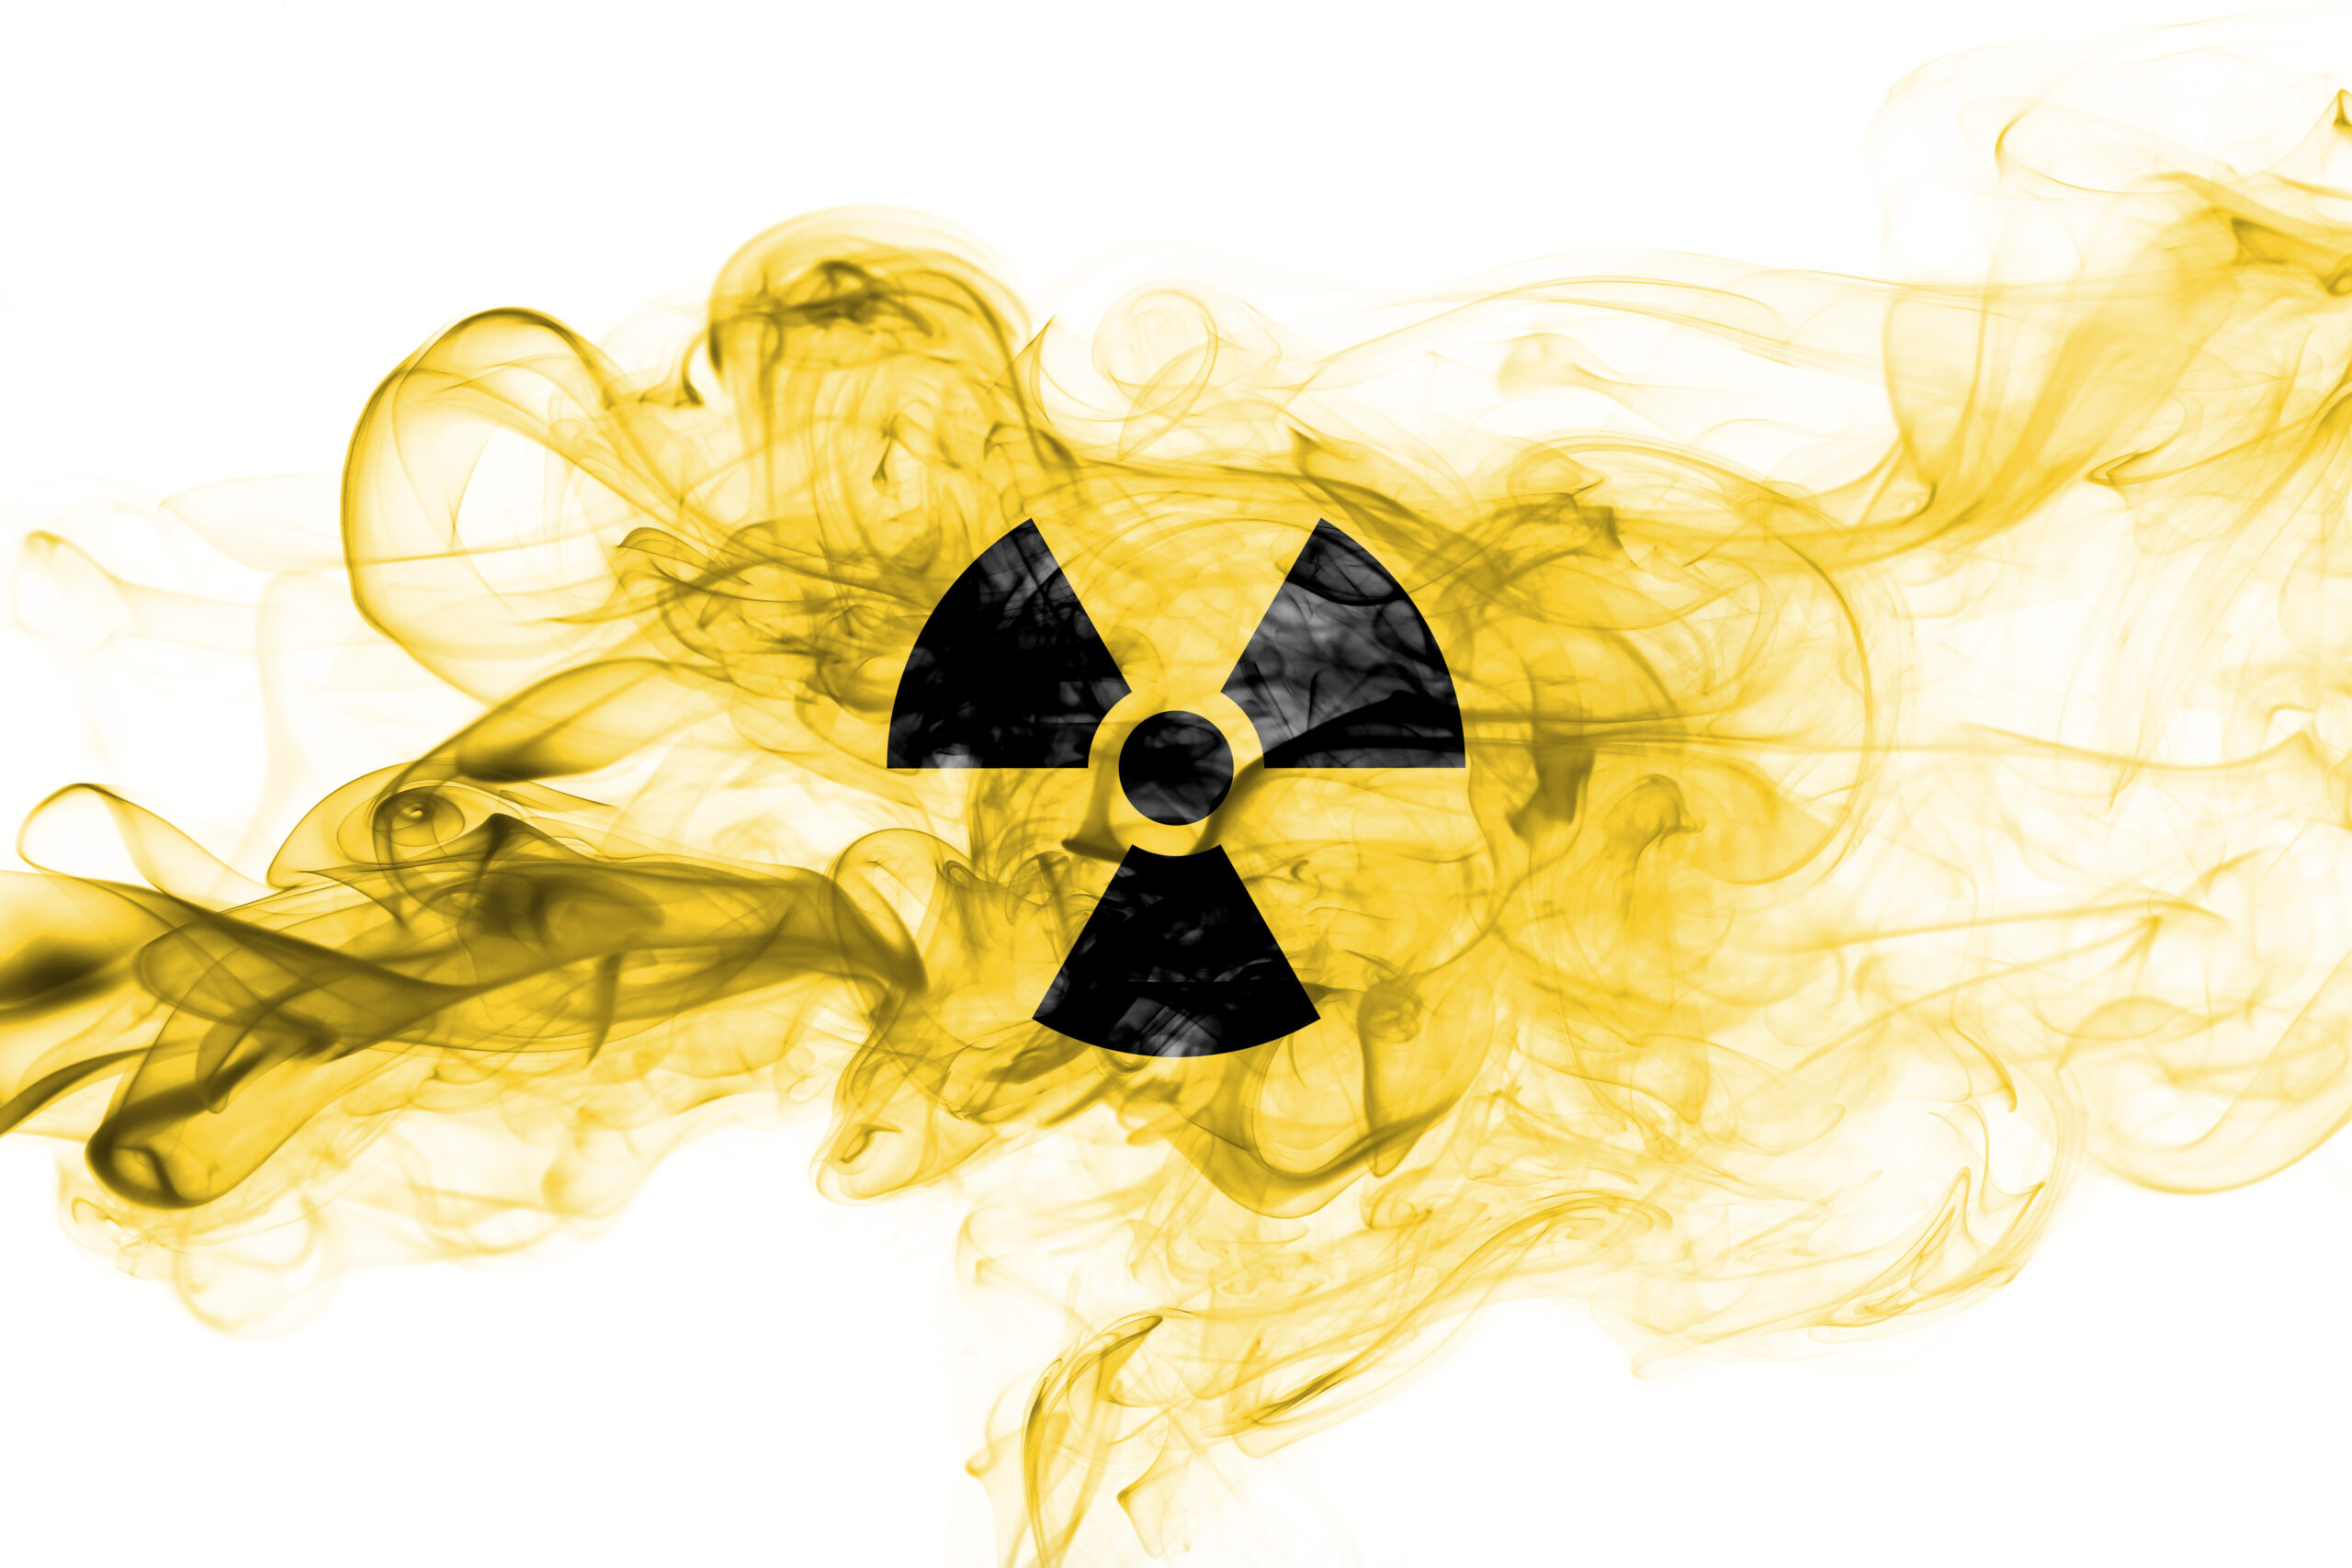 Fukushima & Chernobyl: Inherent Risks Of Using Nuclear Energy